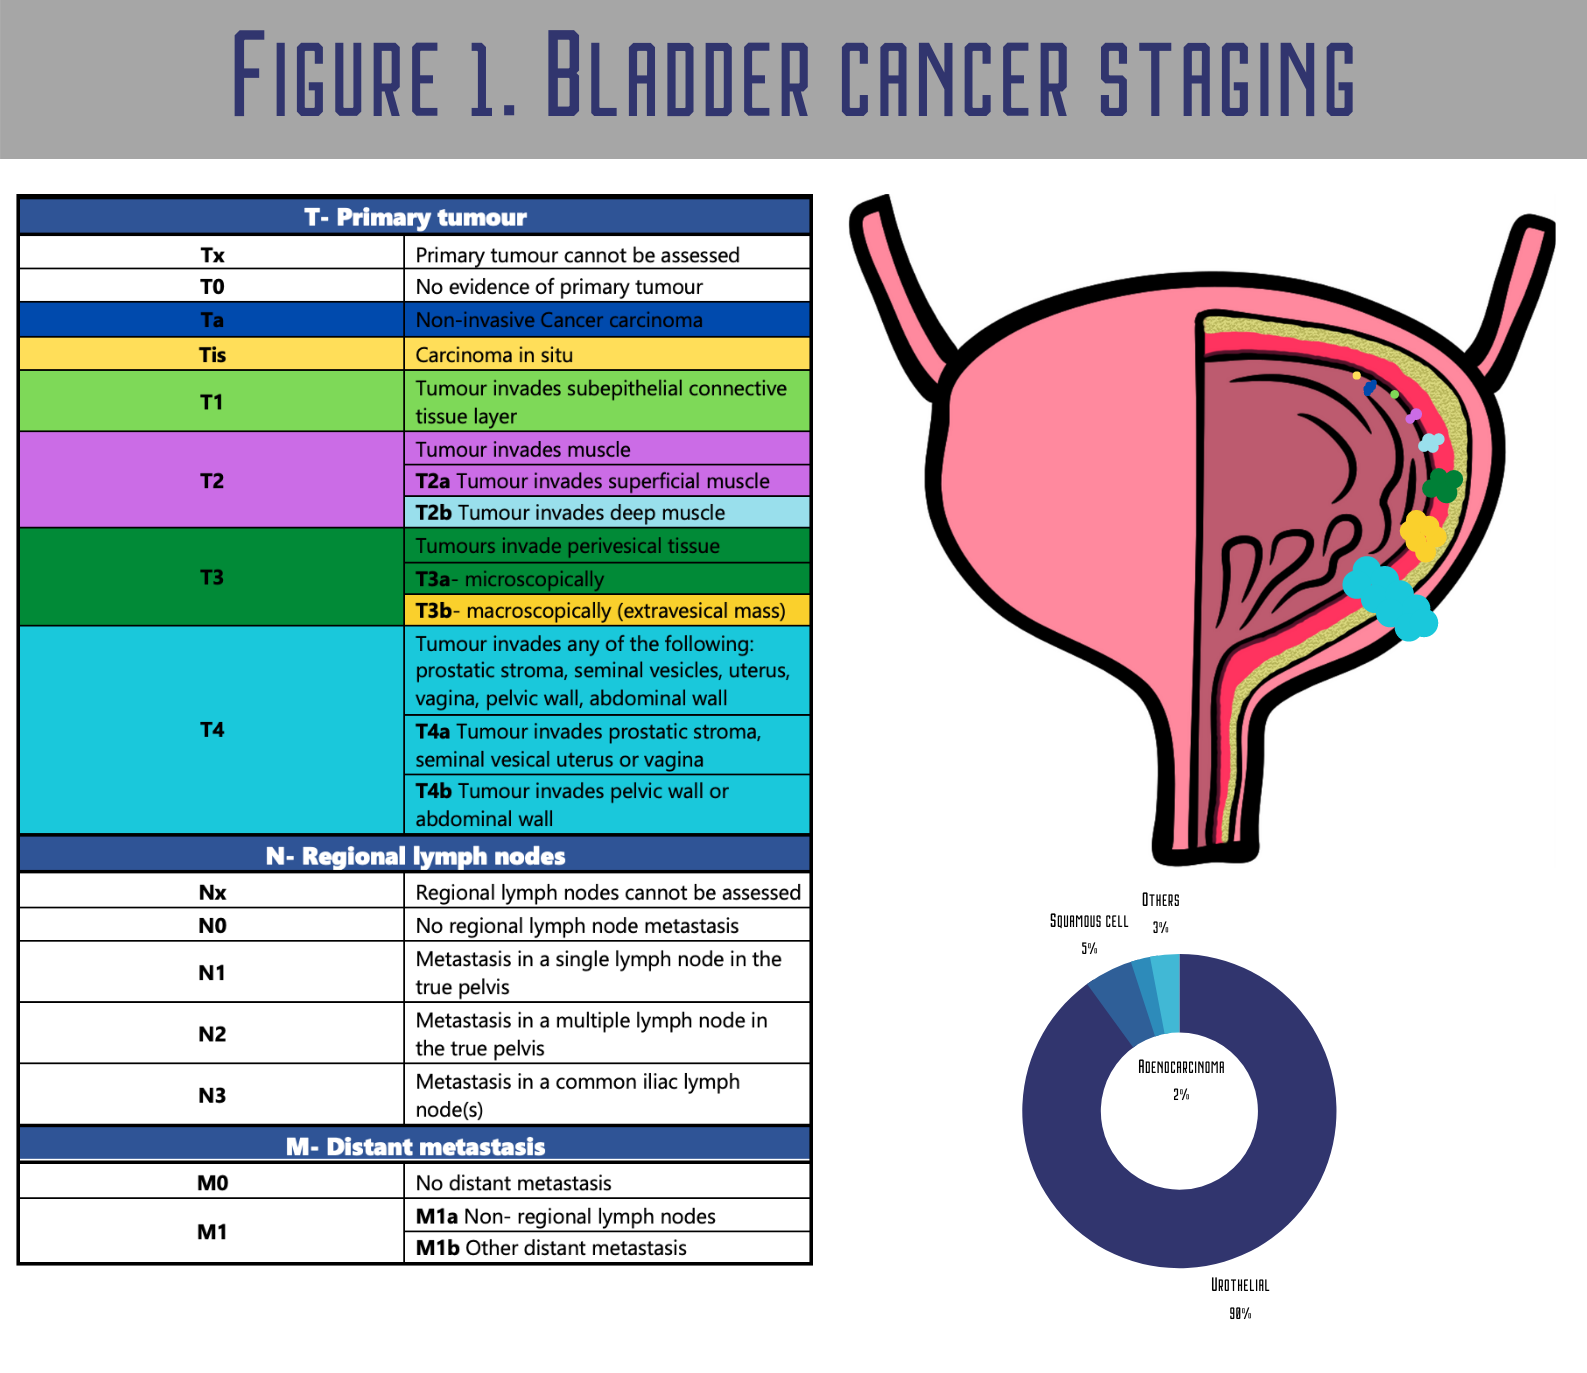 bladder cancer essay